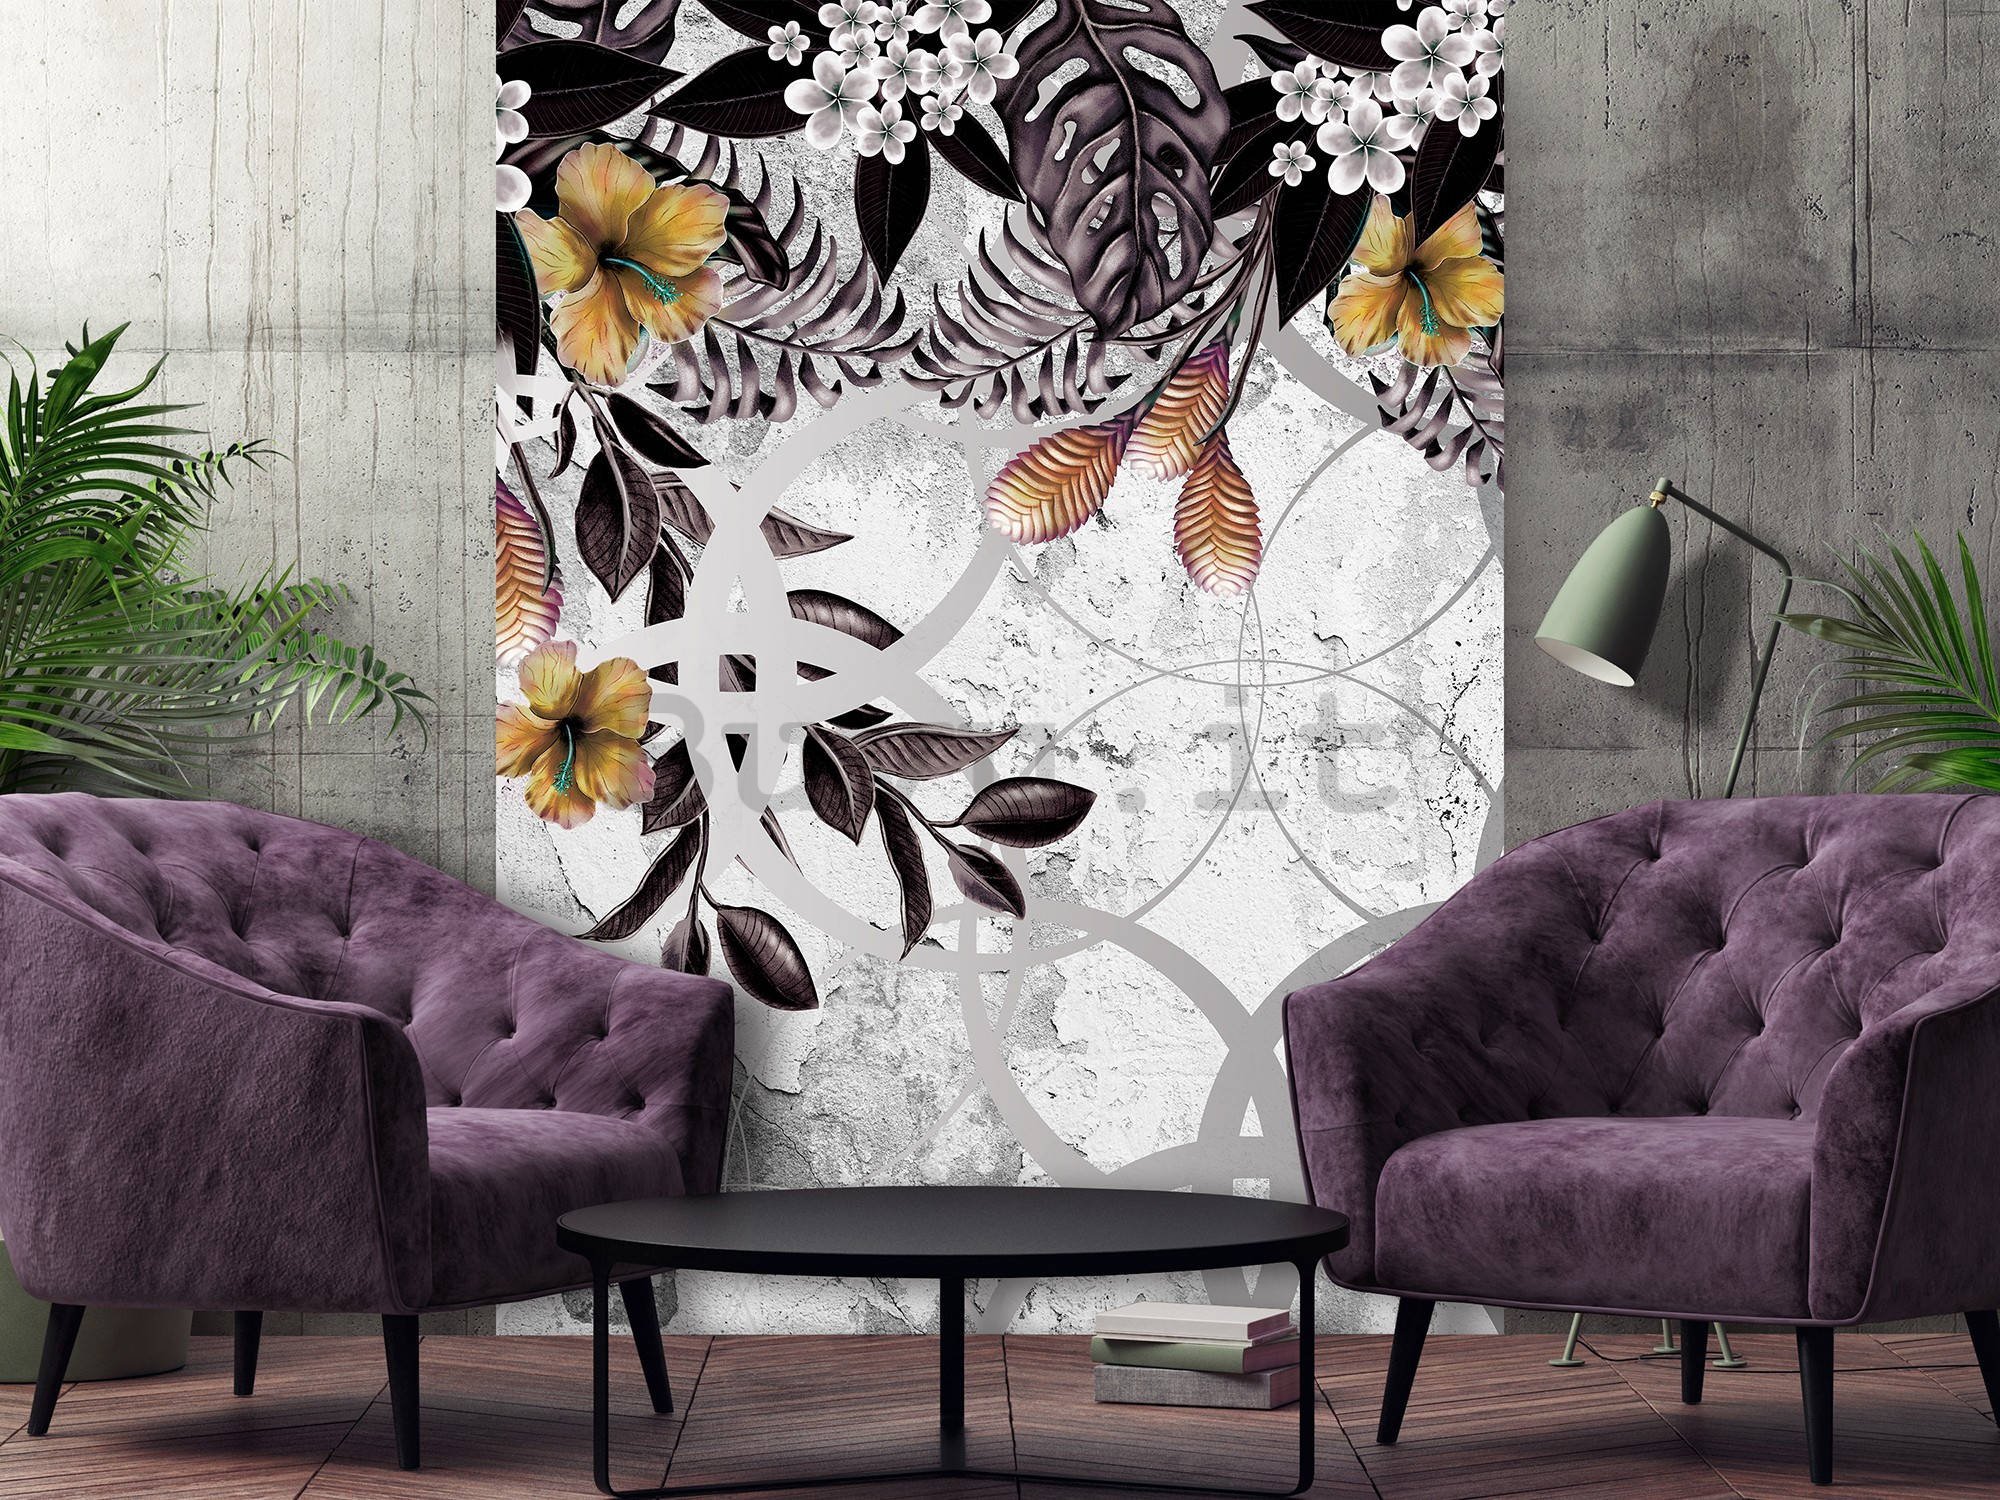 Fotomurale: Astrazione floreale dipinta (1) - 184x254 cm